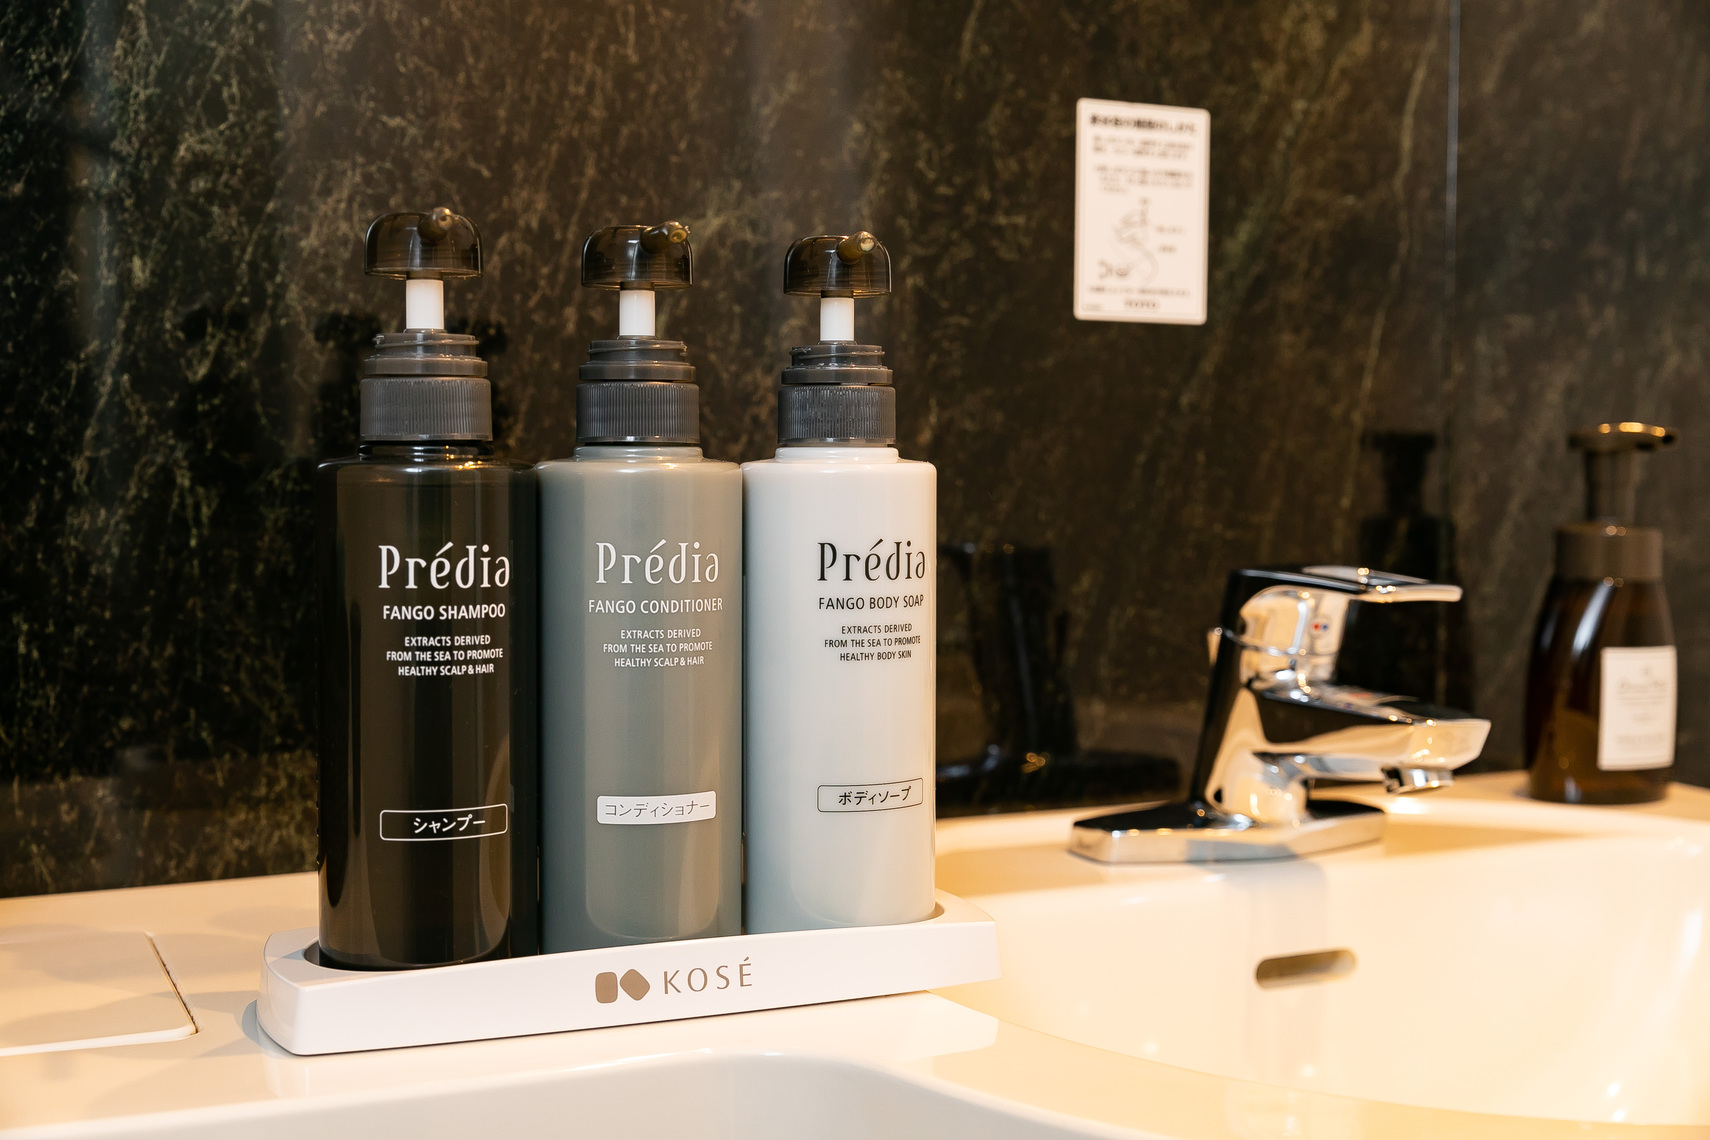 KOSE -Predia-天然ミネラル泥成分配合。うるおいを与え頭皮と毛髪をケアします。